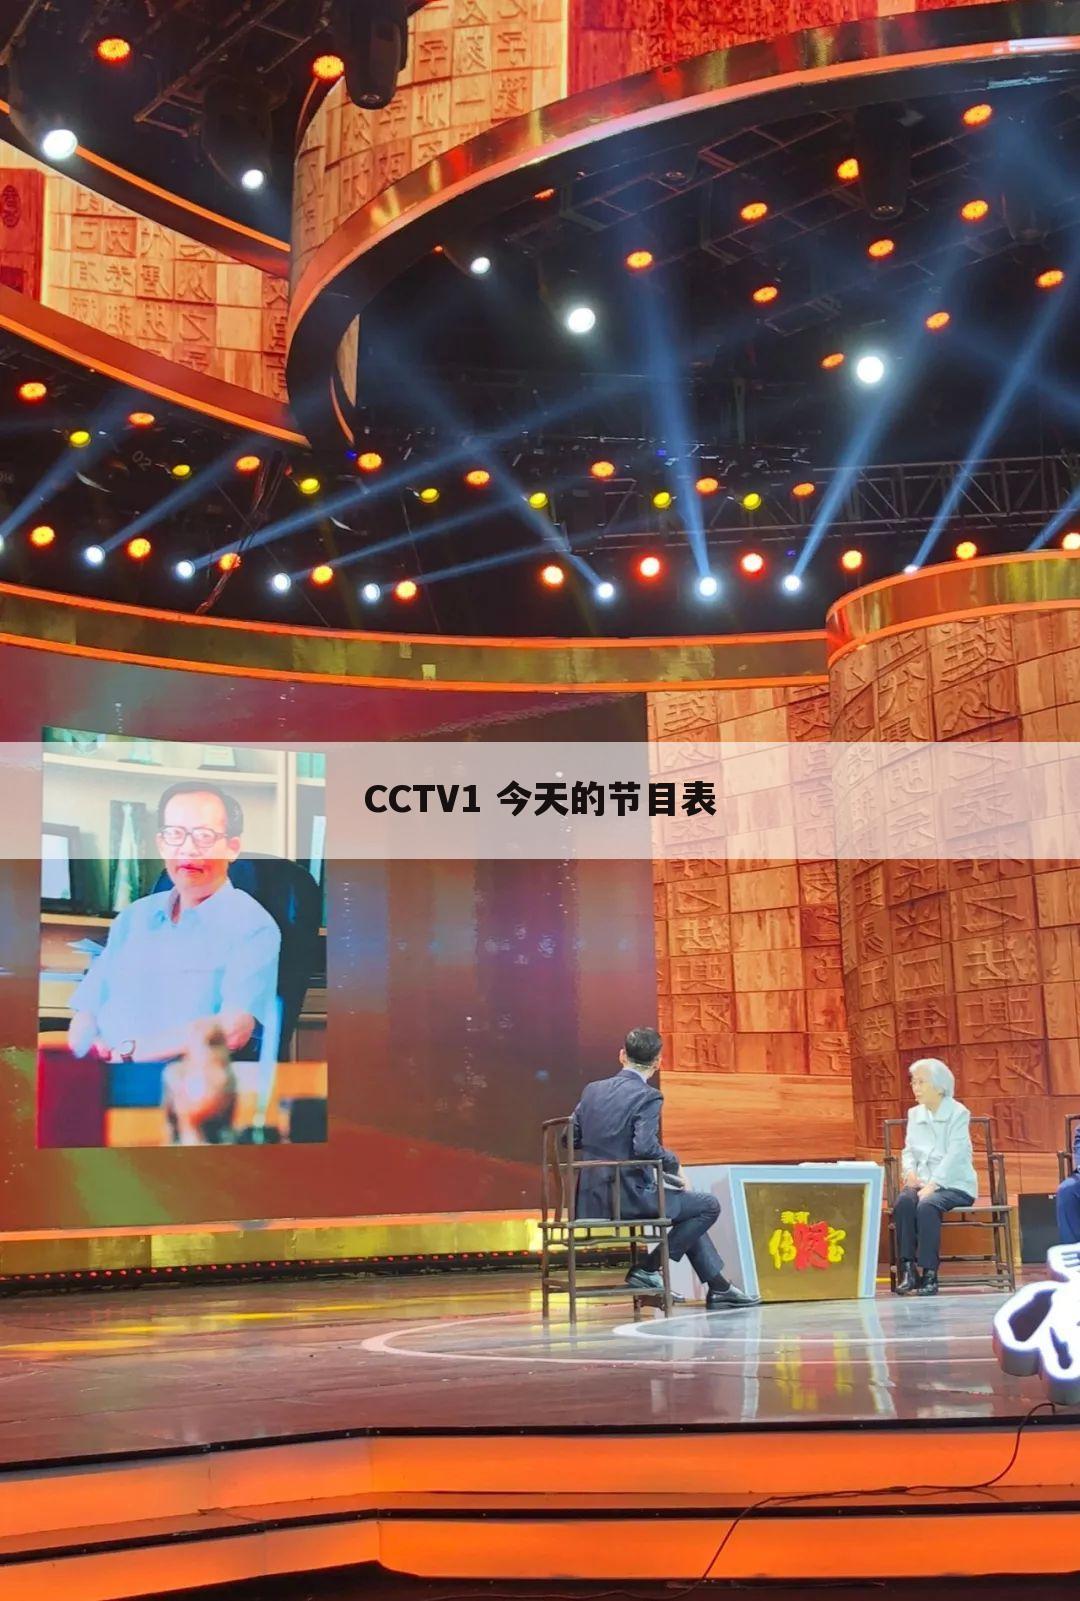 CCTV1 今天的节目表